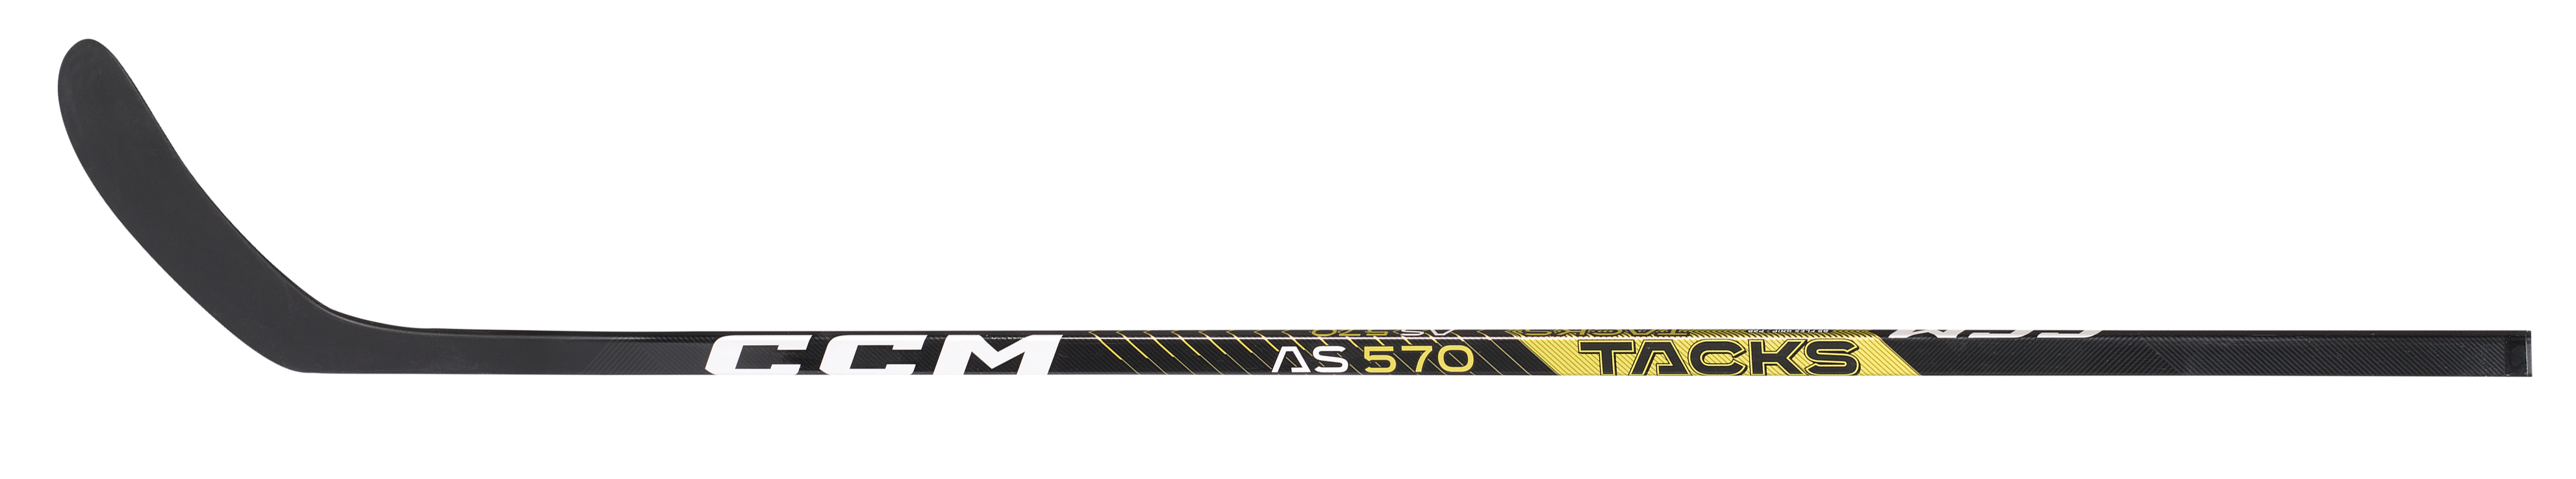 CCM Tacks AS-570 bâton de hockey intermédiaire